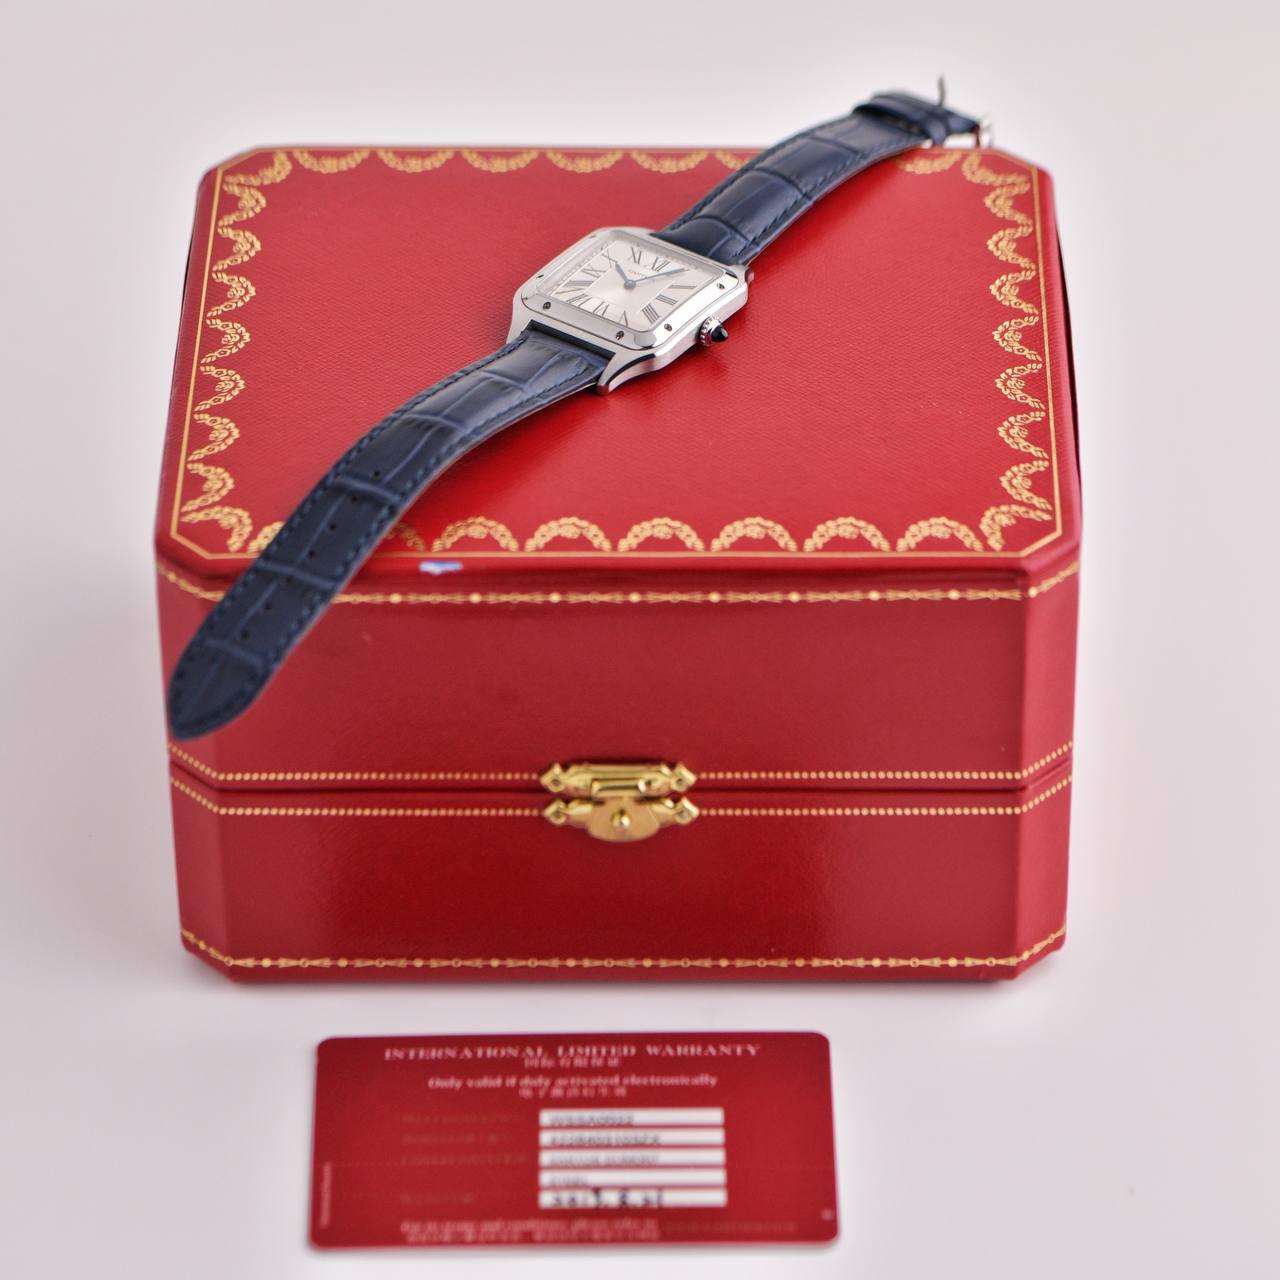 SKU AT-1817
Marke Cartier
Modell Nr. WSSA0022
Einzelhandelspreis £4,000inkl. MwSt. / $4.200 / €4.500 inkl. MwSt.
____________________________________
Datum CIRCA 2019
Geschlecht Unisex / Frauen
Box/Papiere Ja/